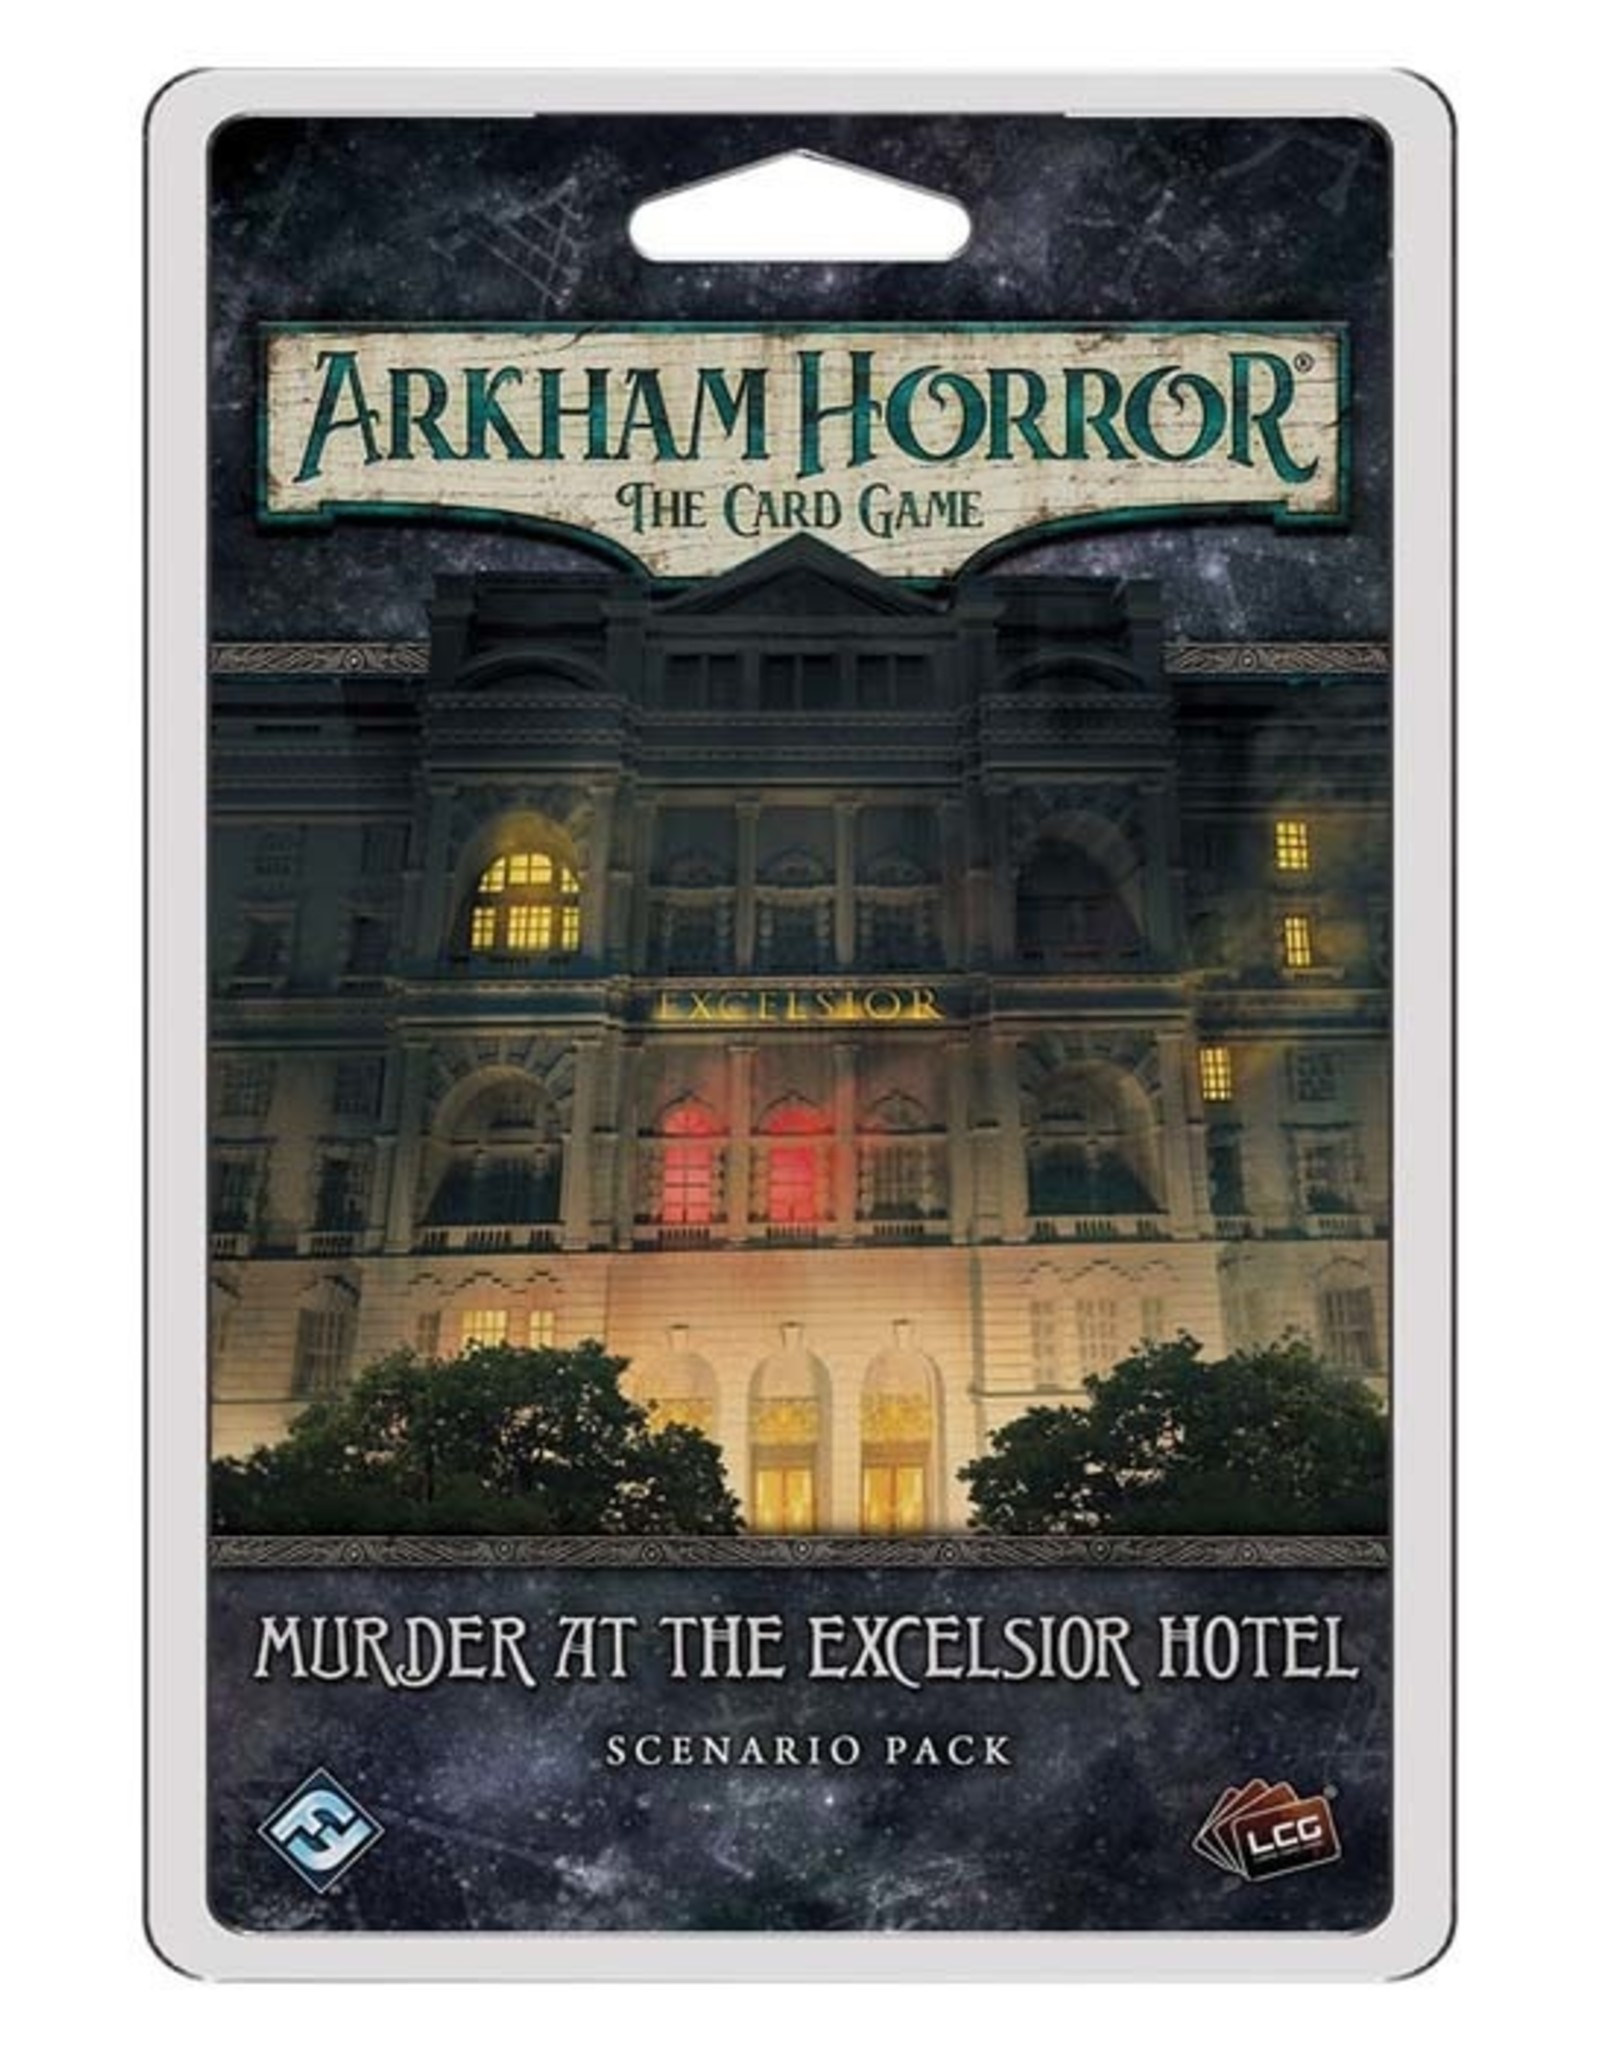 Arkham Horror Arkham Horror: The Card Game - Scenario Pack - Murder at the Excelsior Hotel